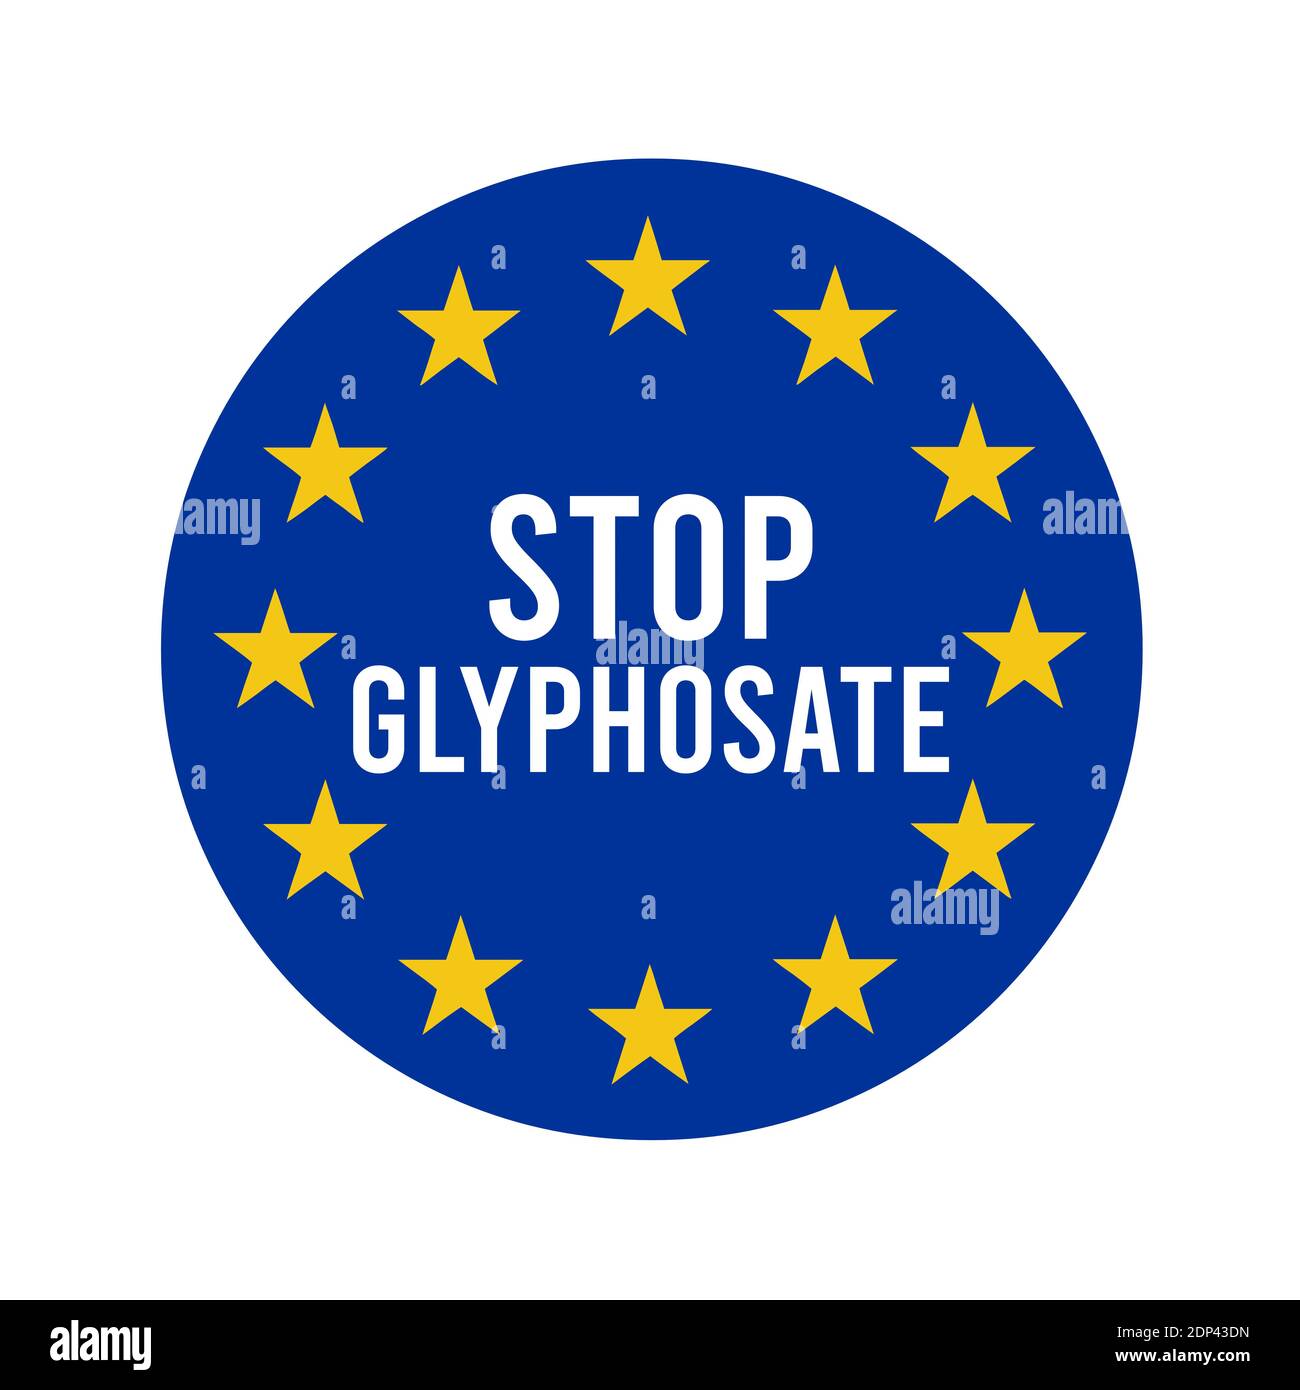 Stop glyphosate symbol in Europe Stock Photo